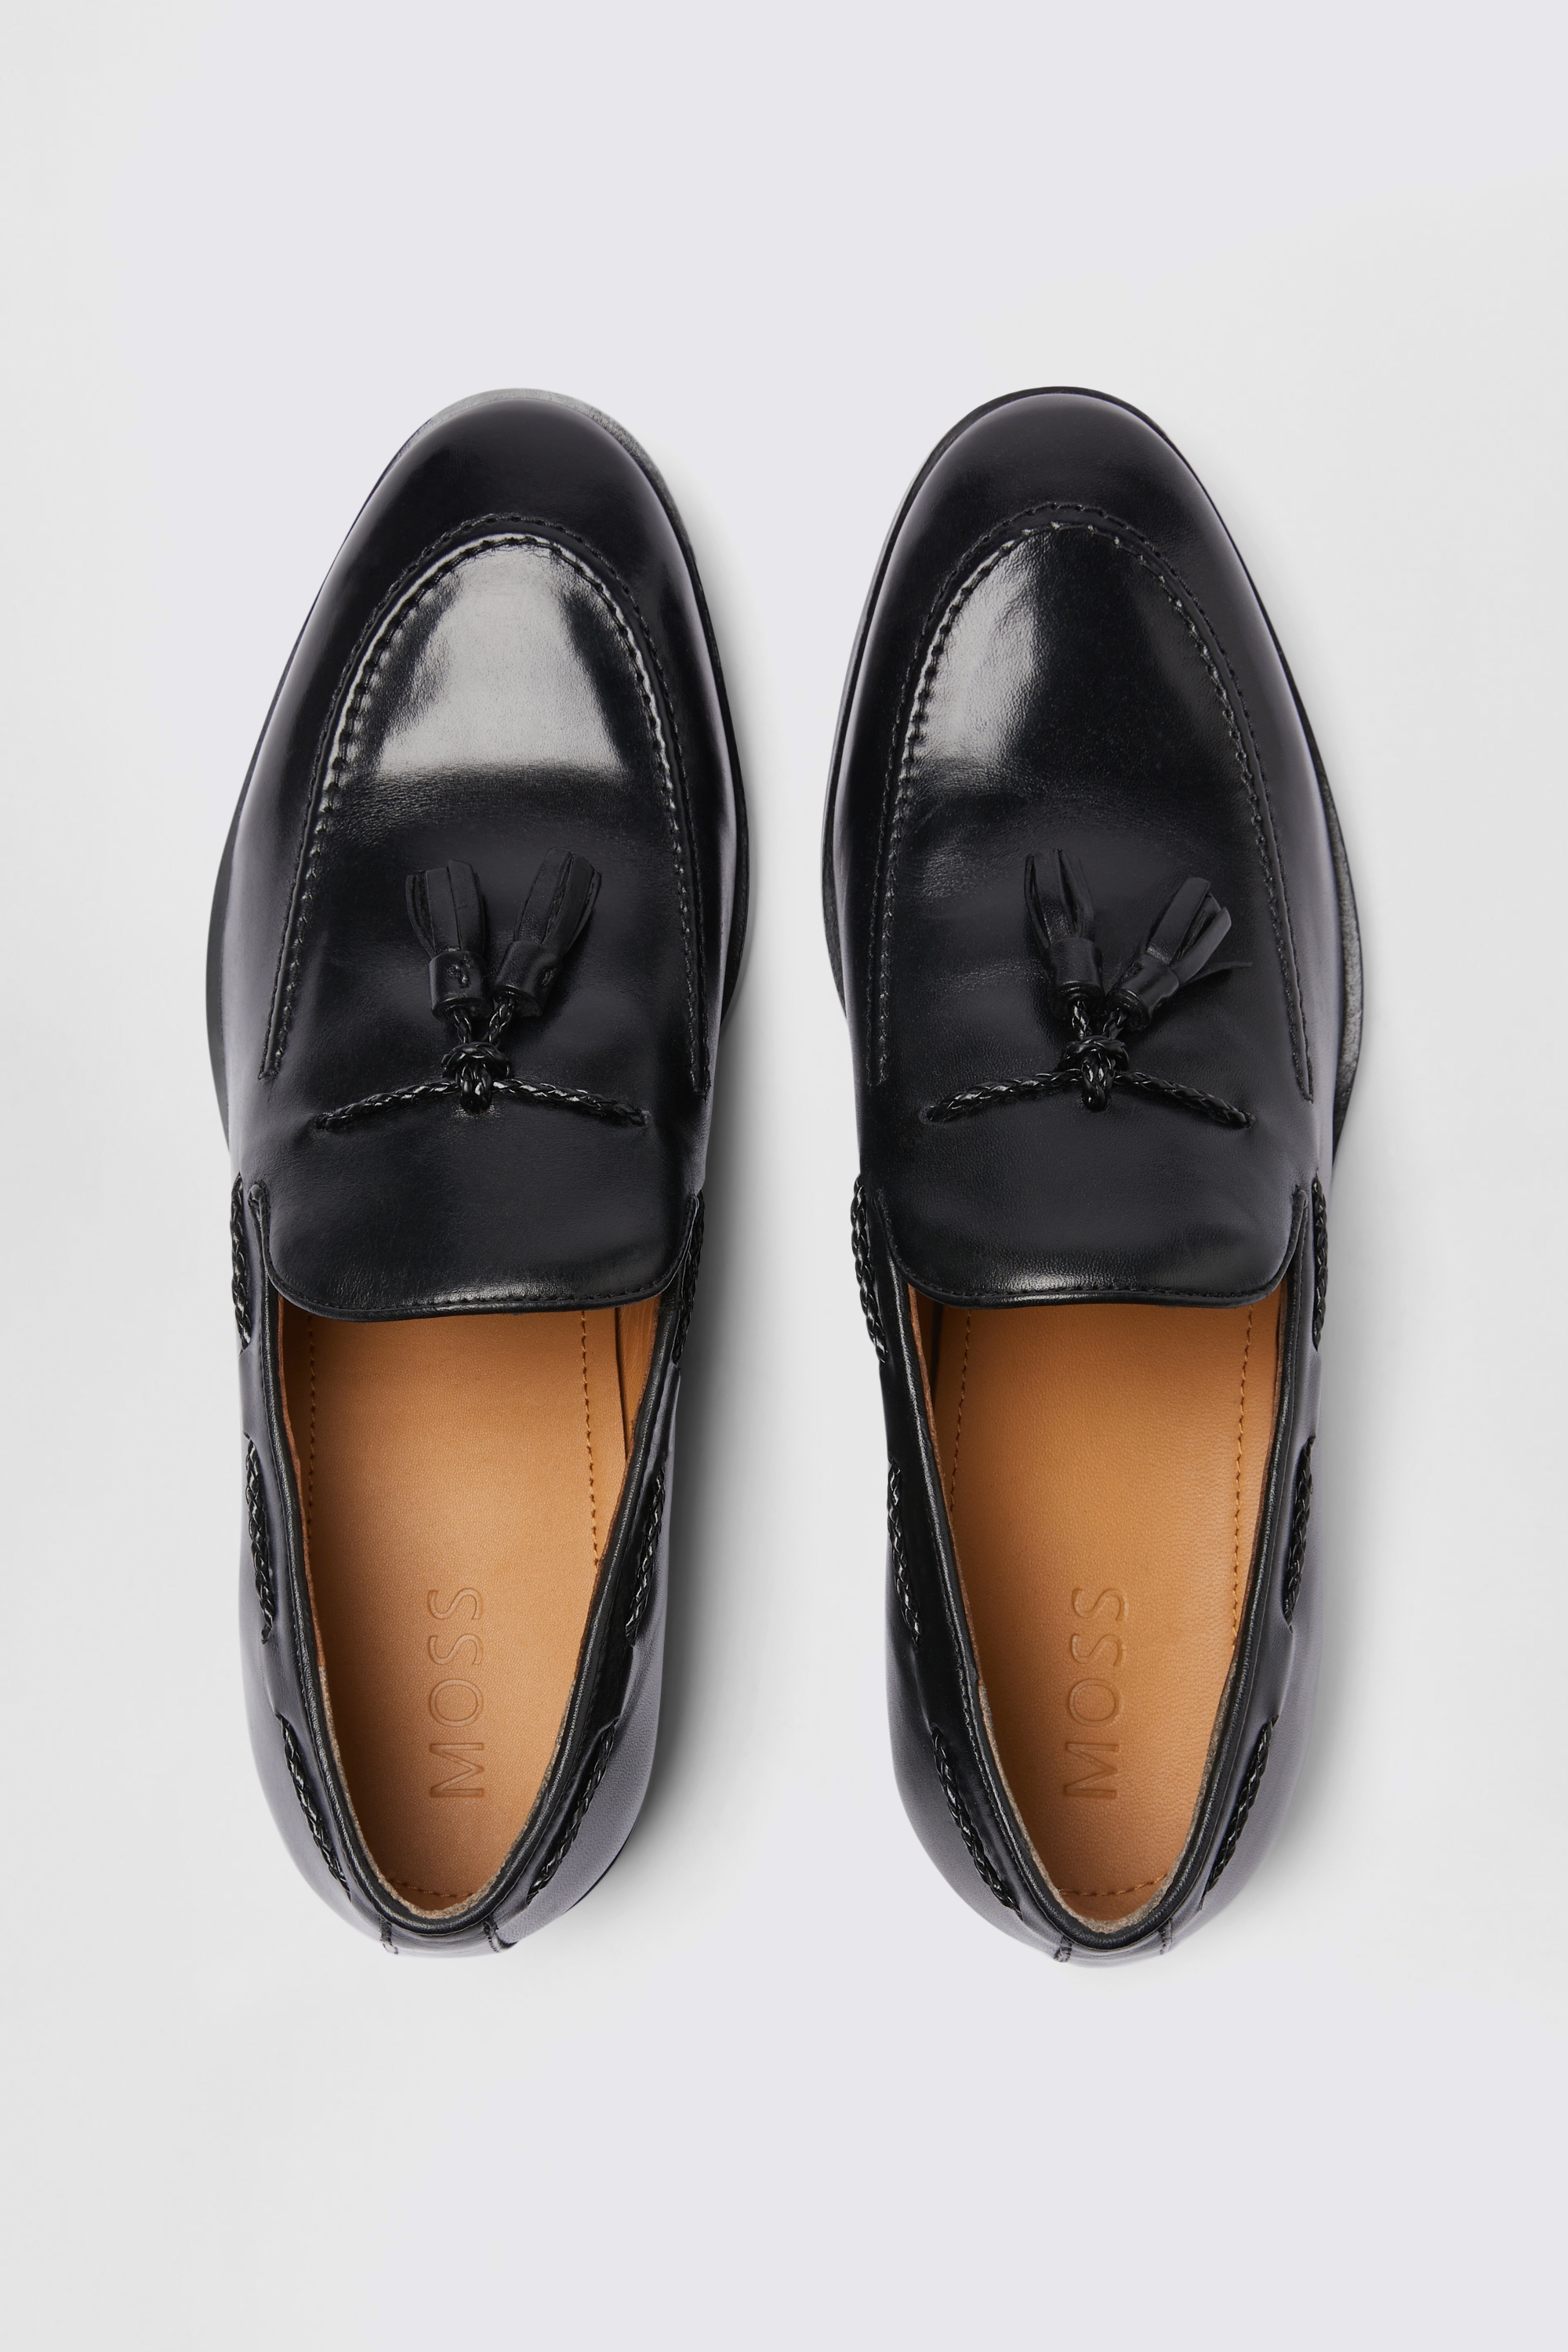 Highgate Black Tassel Loafers | Buy Online at Moss